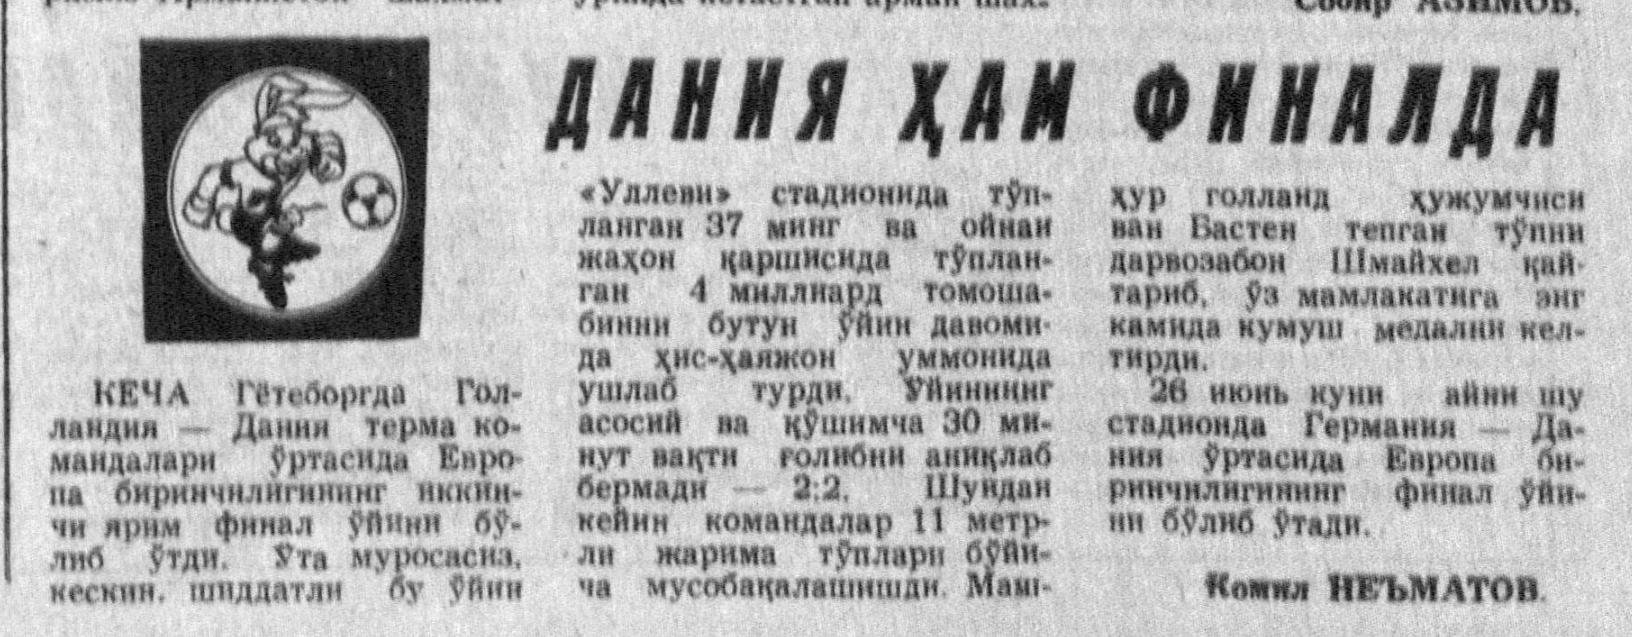 «Ўзбекистон овози» газетасининг 1992 йил 23 июнь сонидан лавҳа